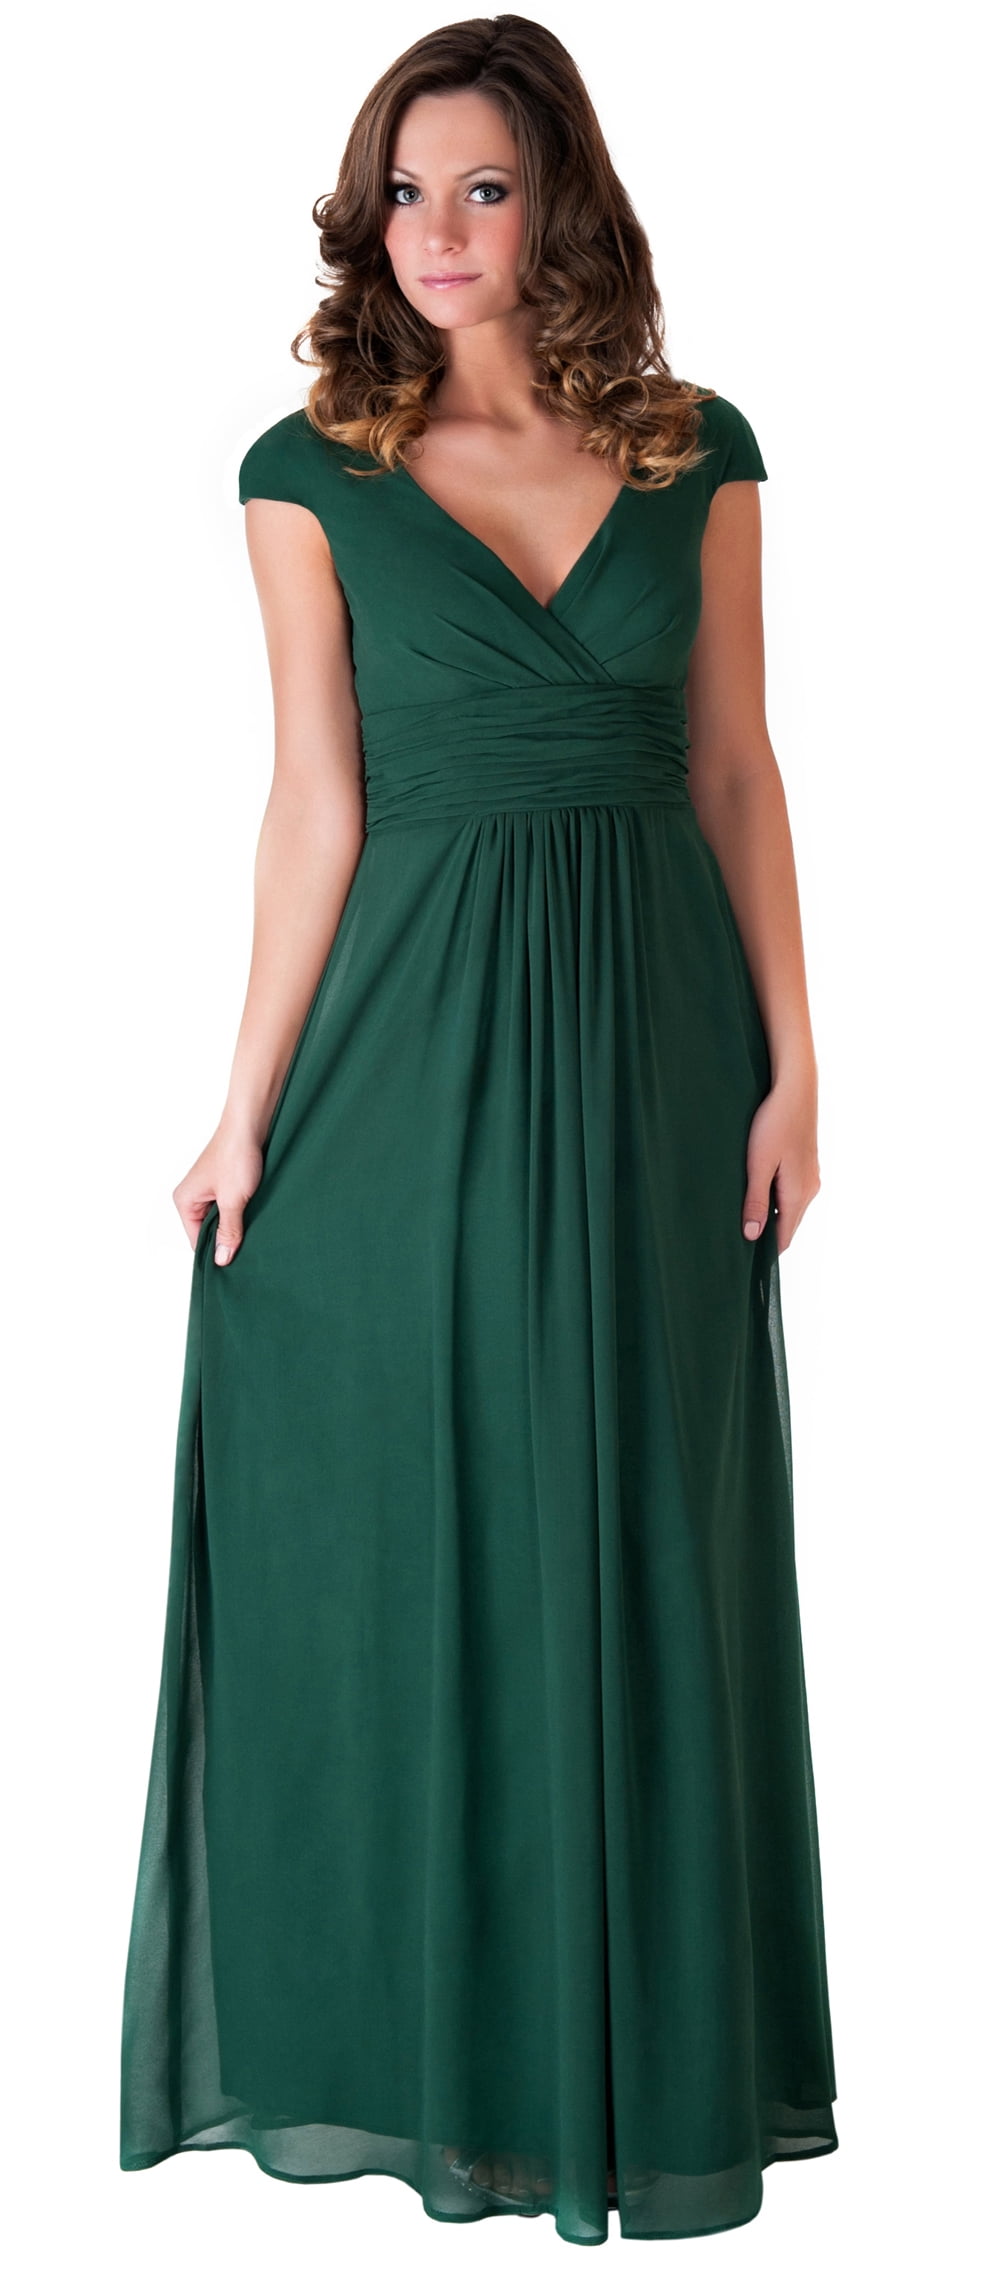 Faship Womens V-Neck Evening Gown Formal Dress Hunter Green - L,Hunter ...